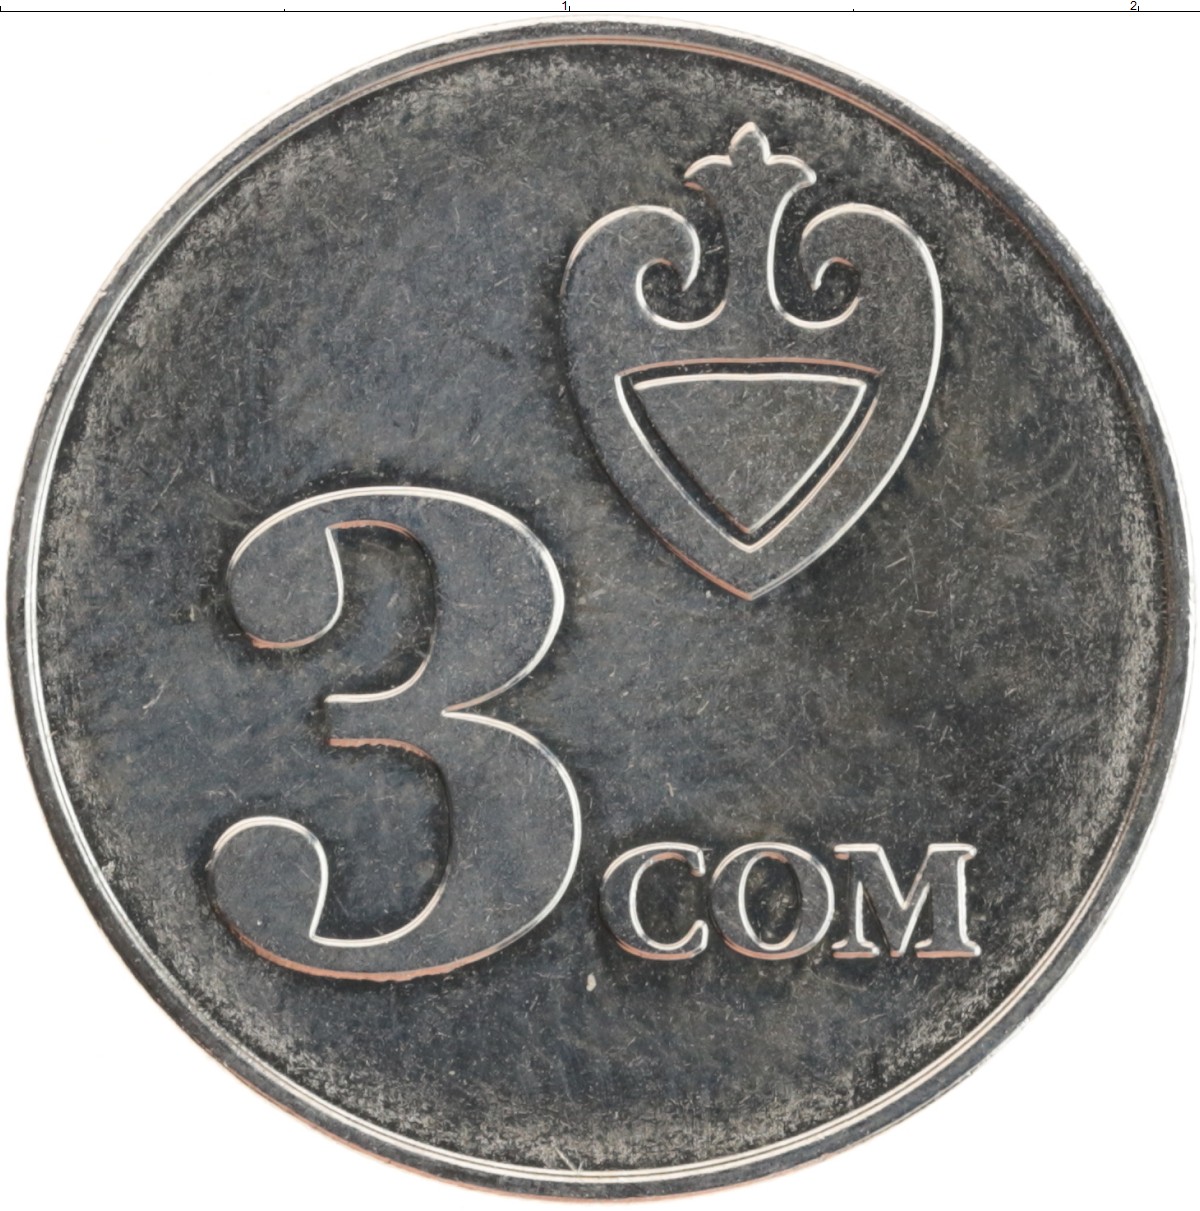 3 сома в рублях. Монета 3 сом 2008 Киргизия. Монета 3 сома. Бир сом монета. Кыргызские монеты 3 сома.